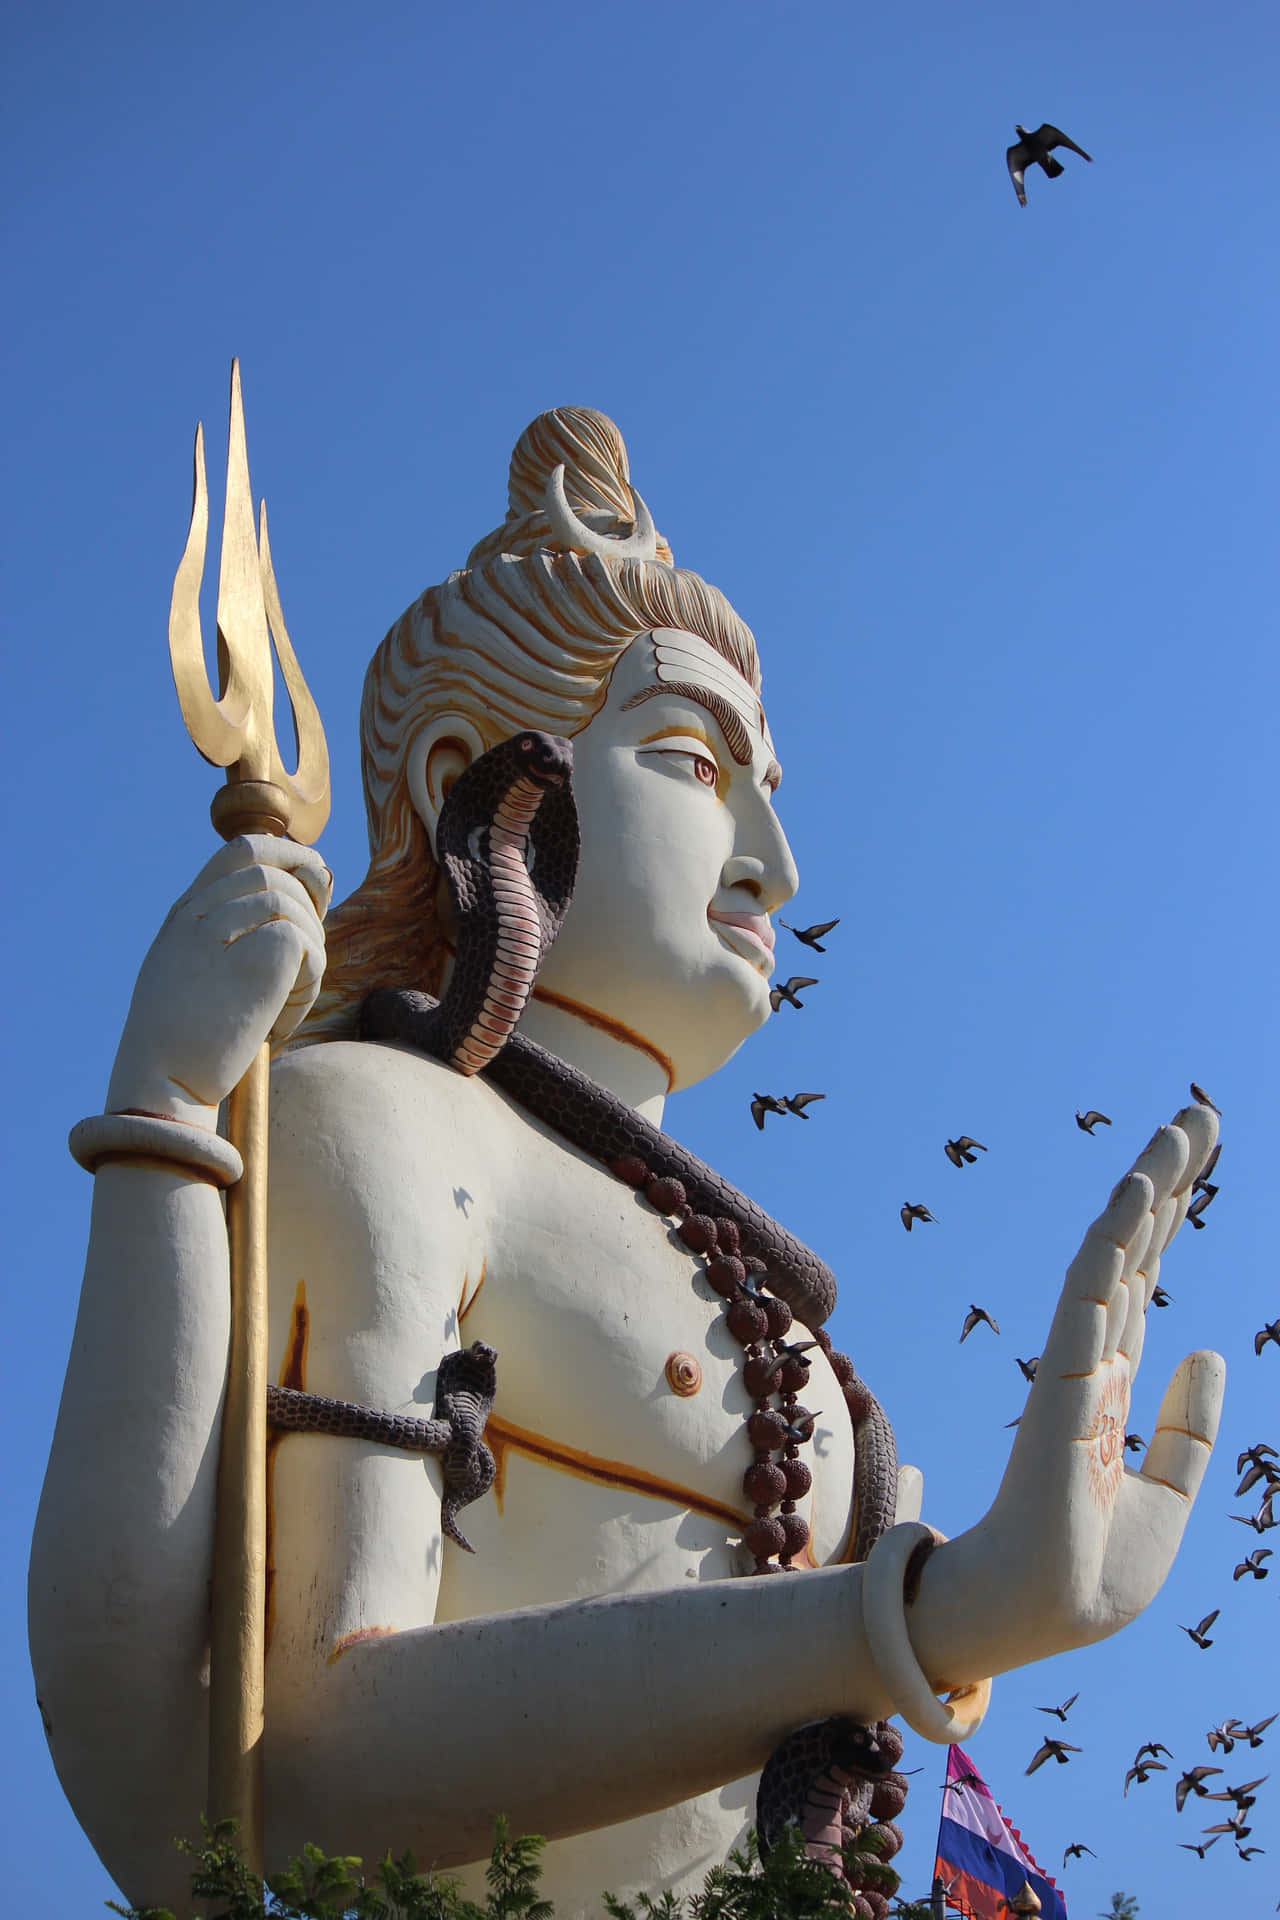 Lord Shiva, the Supreme God of Hinduism